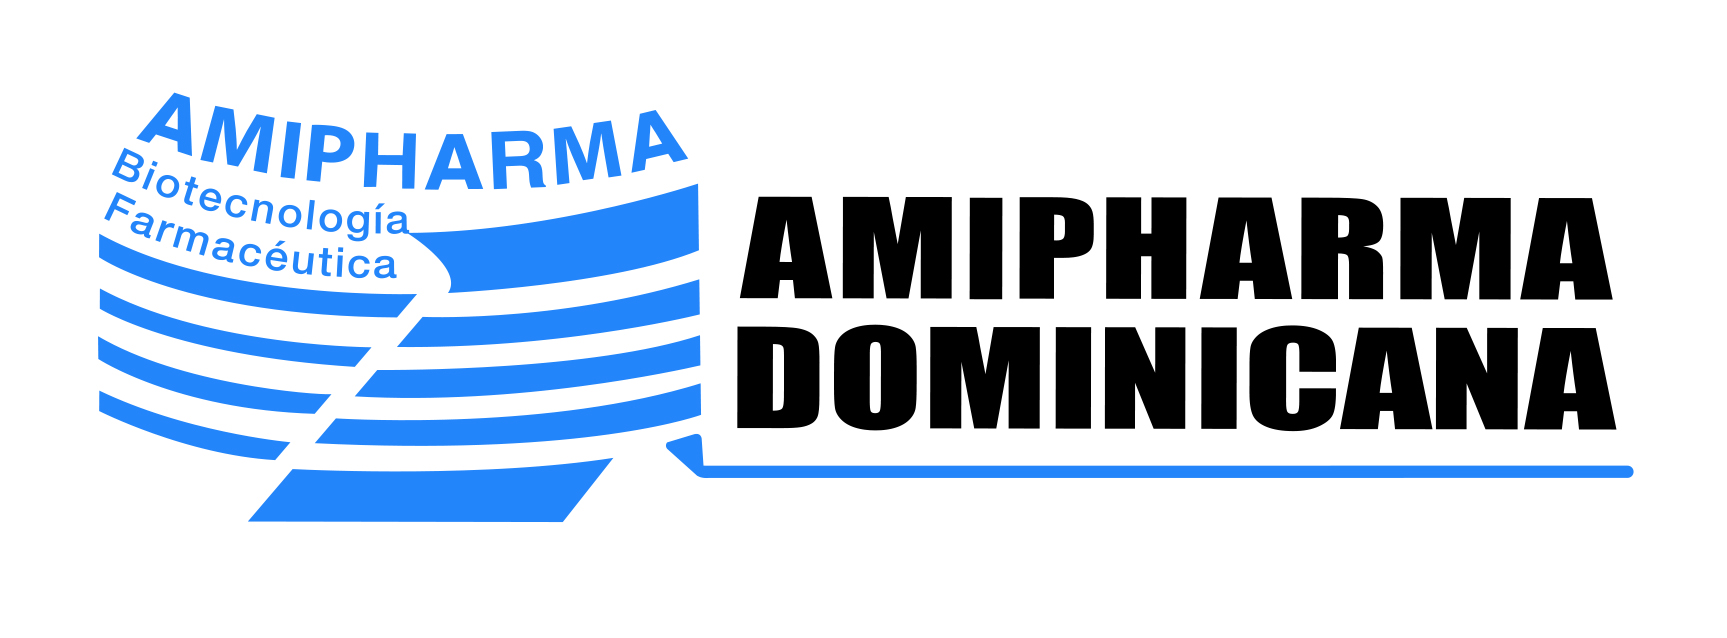 Amipharma